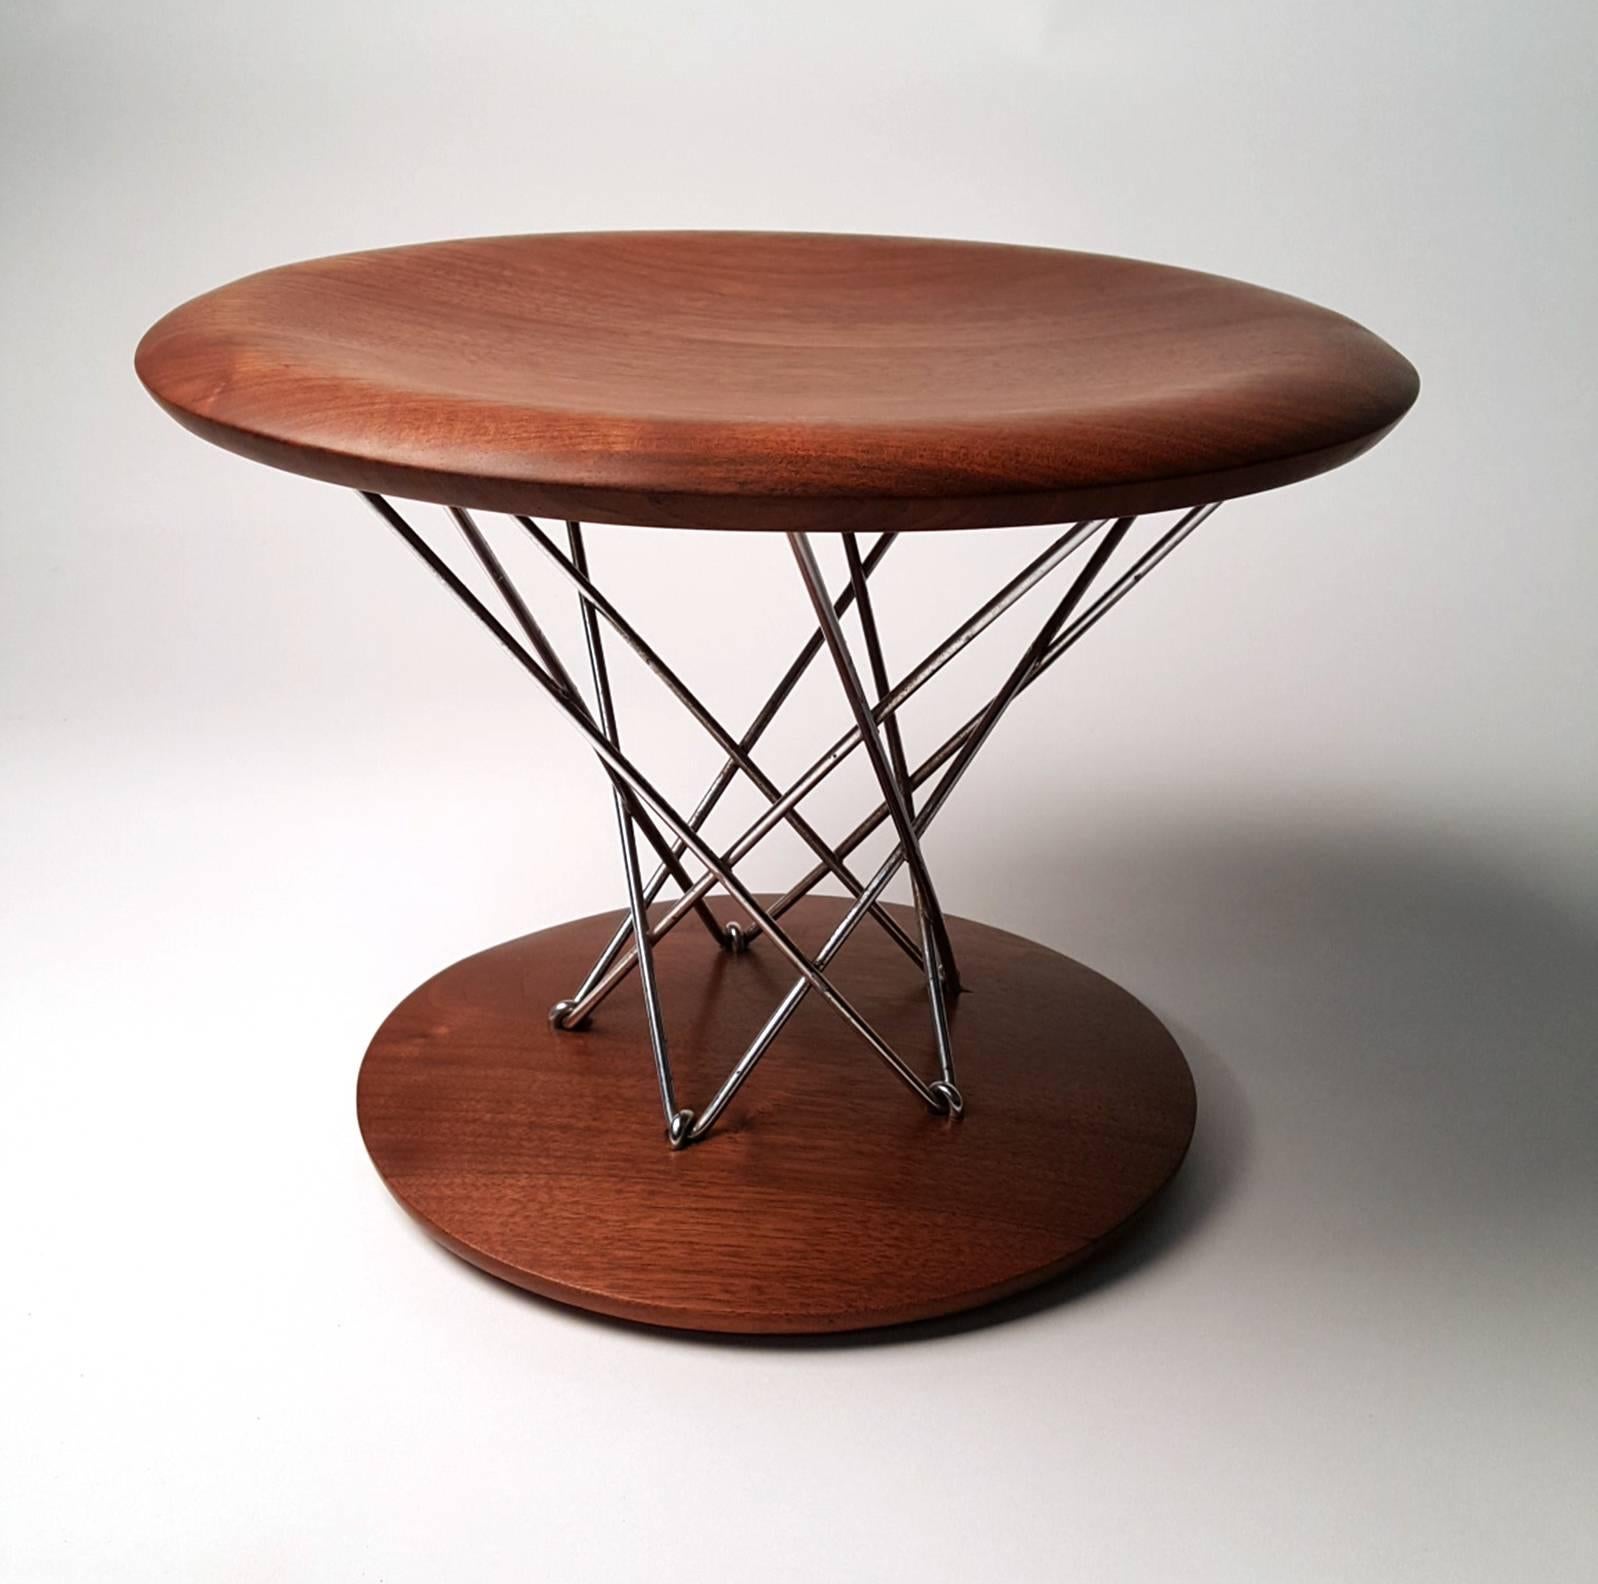 Early, solid walnut Isamu Noguchi rocking stool. Model 85-t. Produced by Knoll.